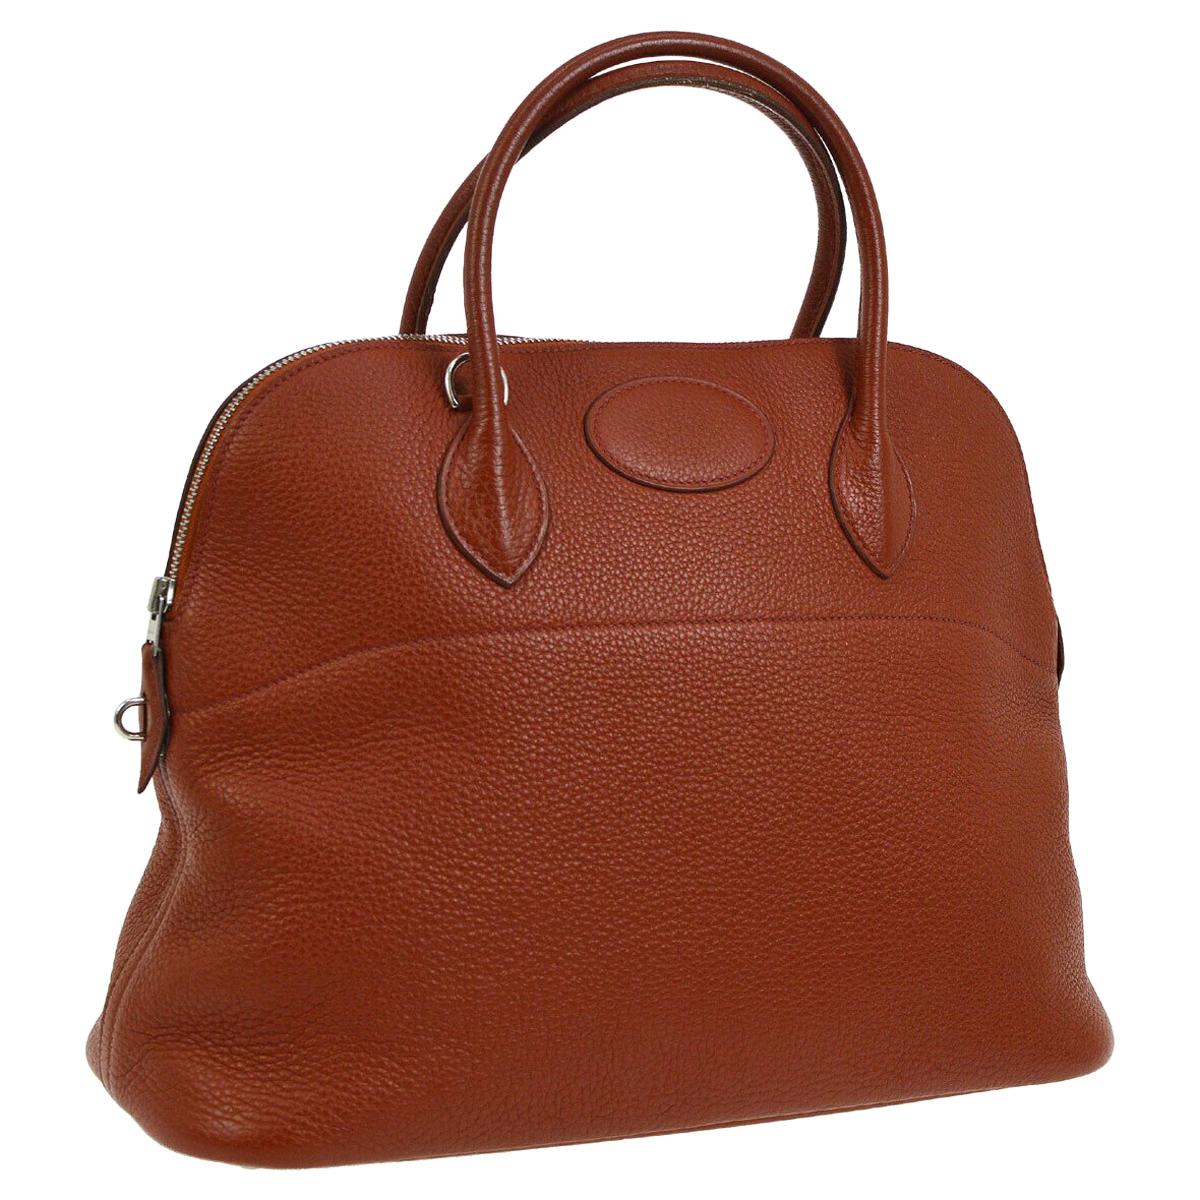 Hermes Leather Carryall Top Handle Satchel Tote Bag